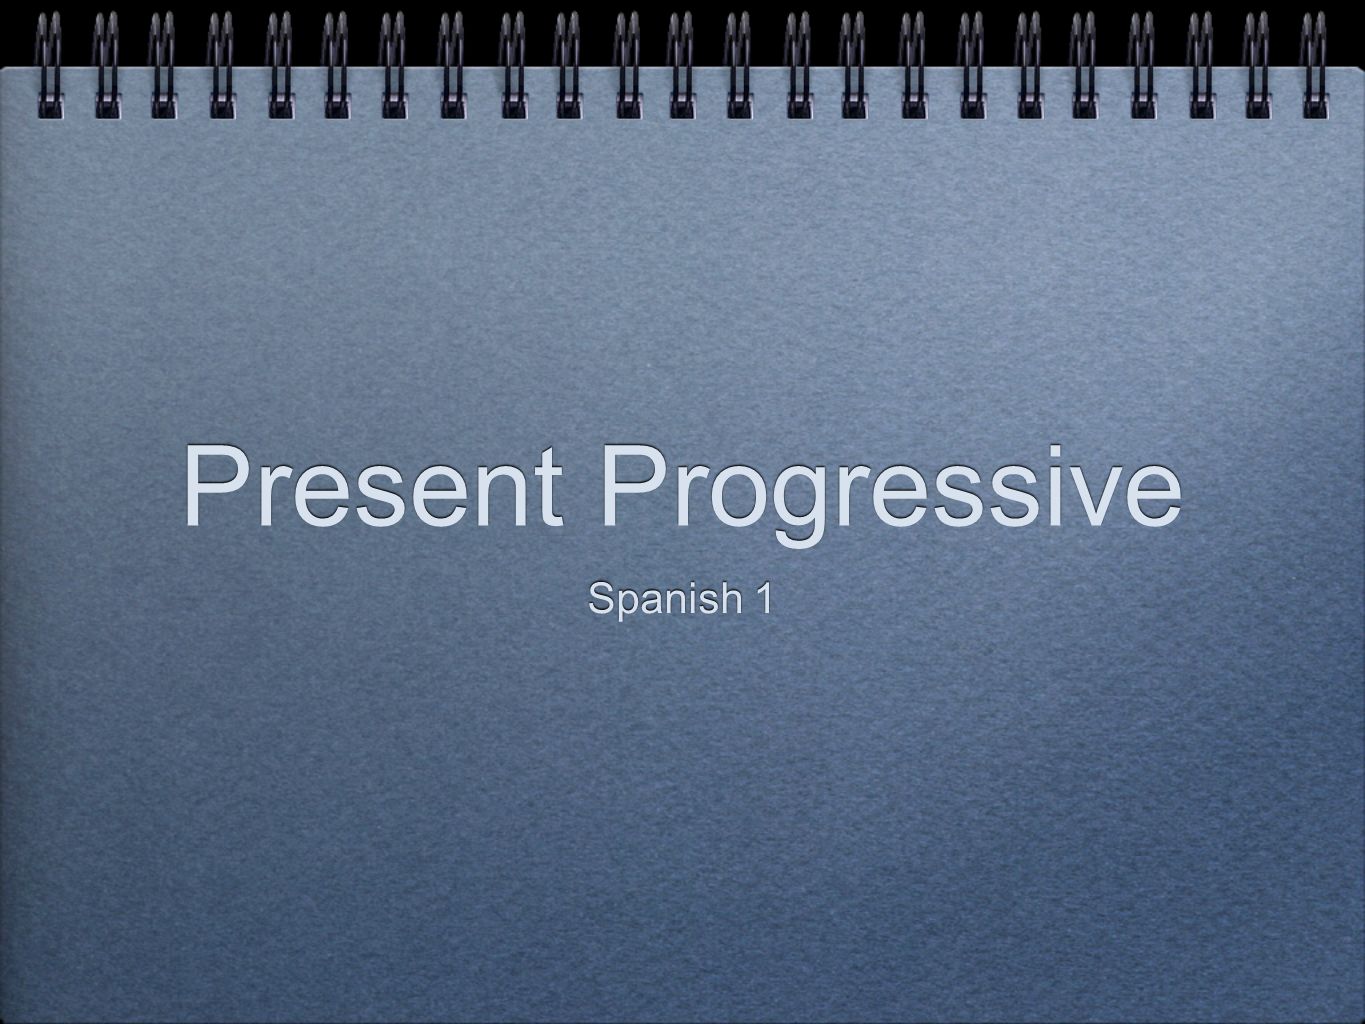 Present Progressive Spanish 1